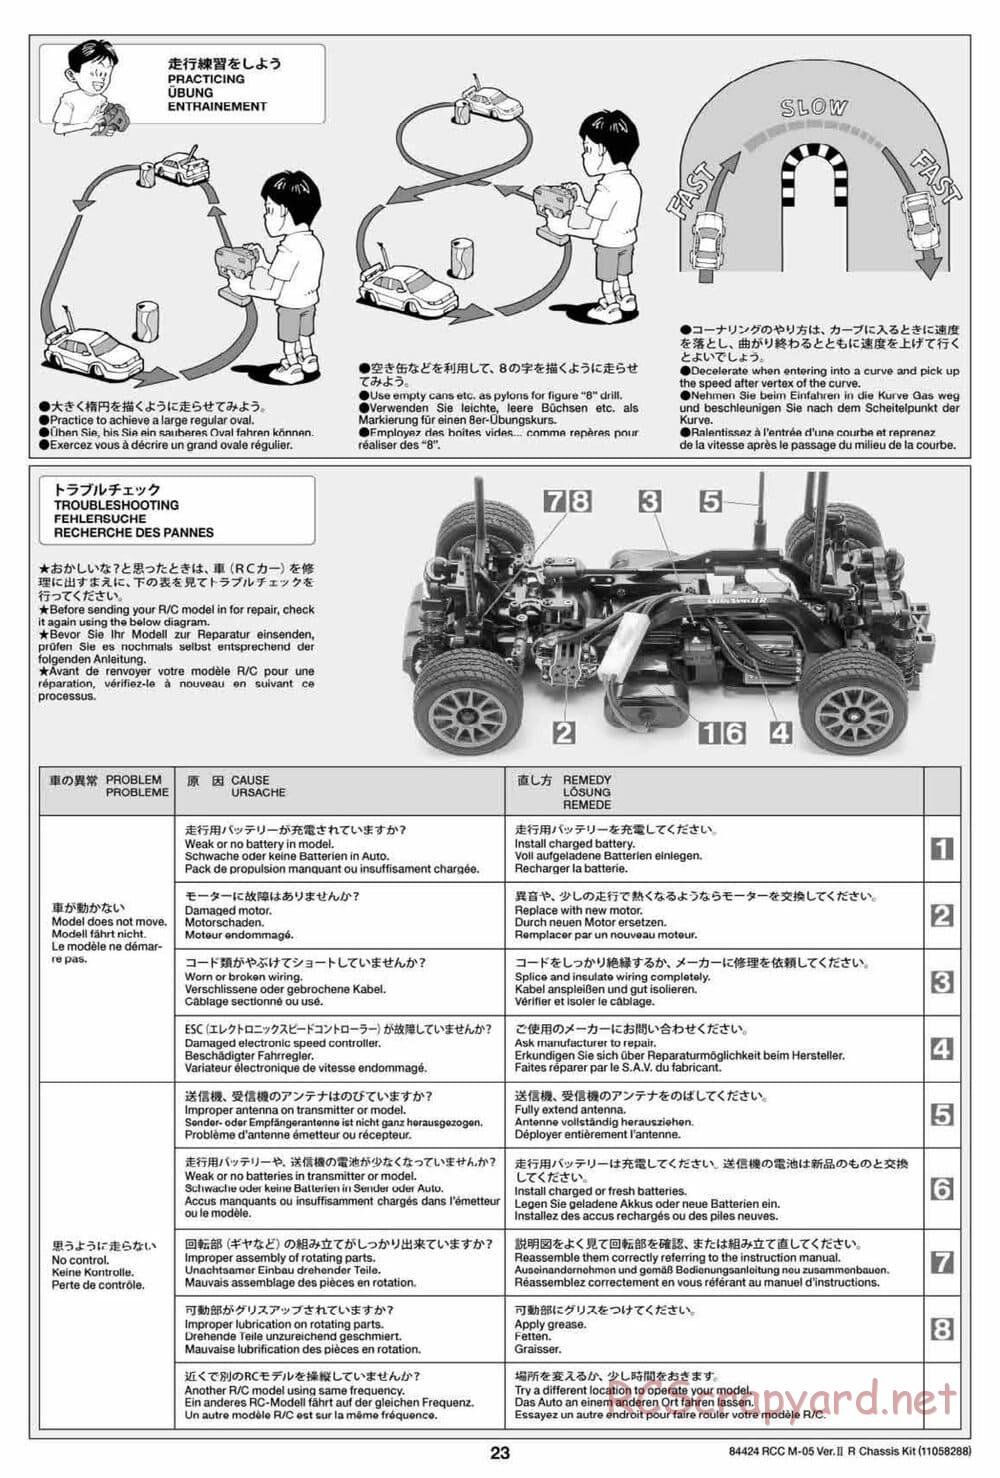 Tamiya - M-05 Ver.II R Chassis Chassis - Manual - Page 23